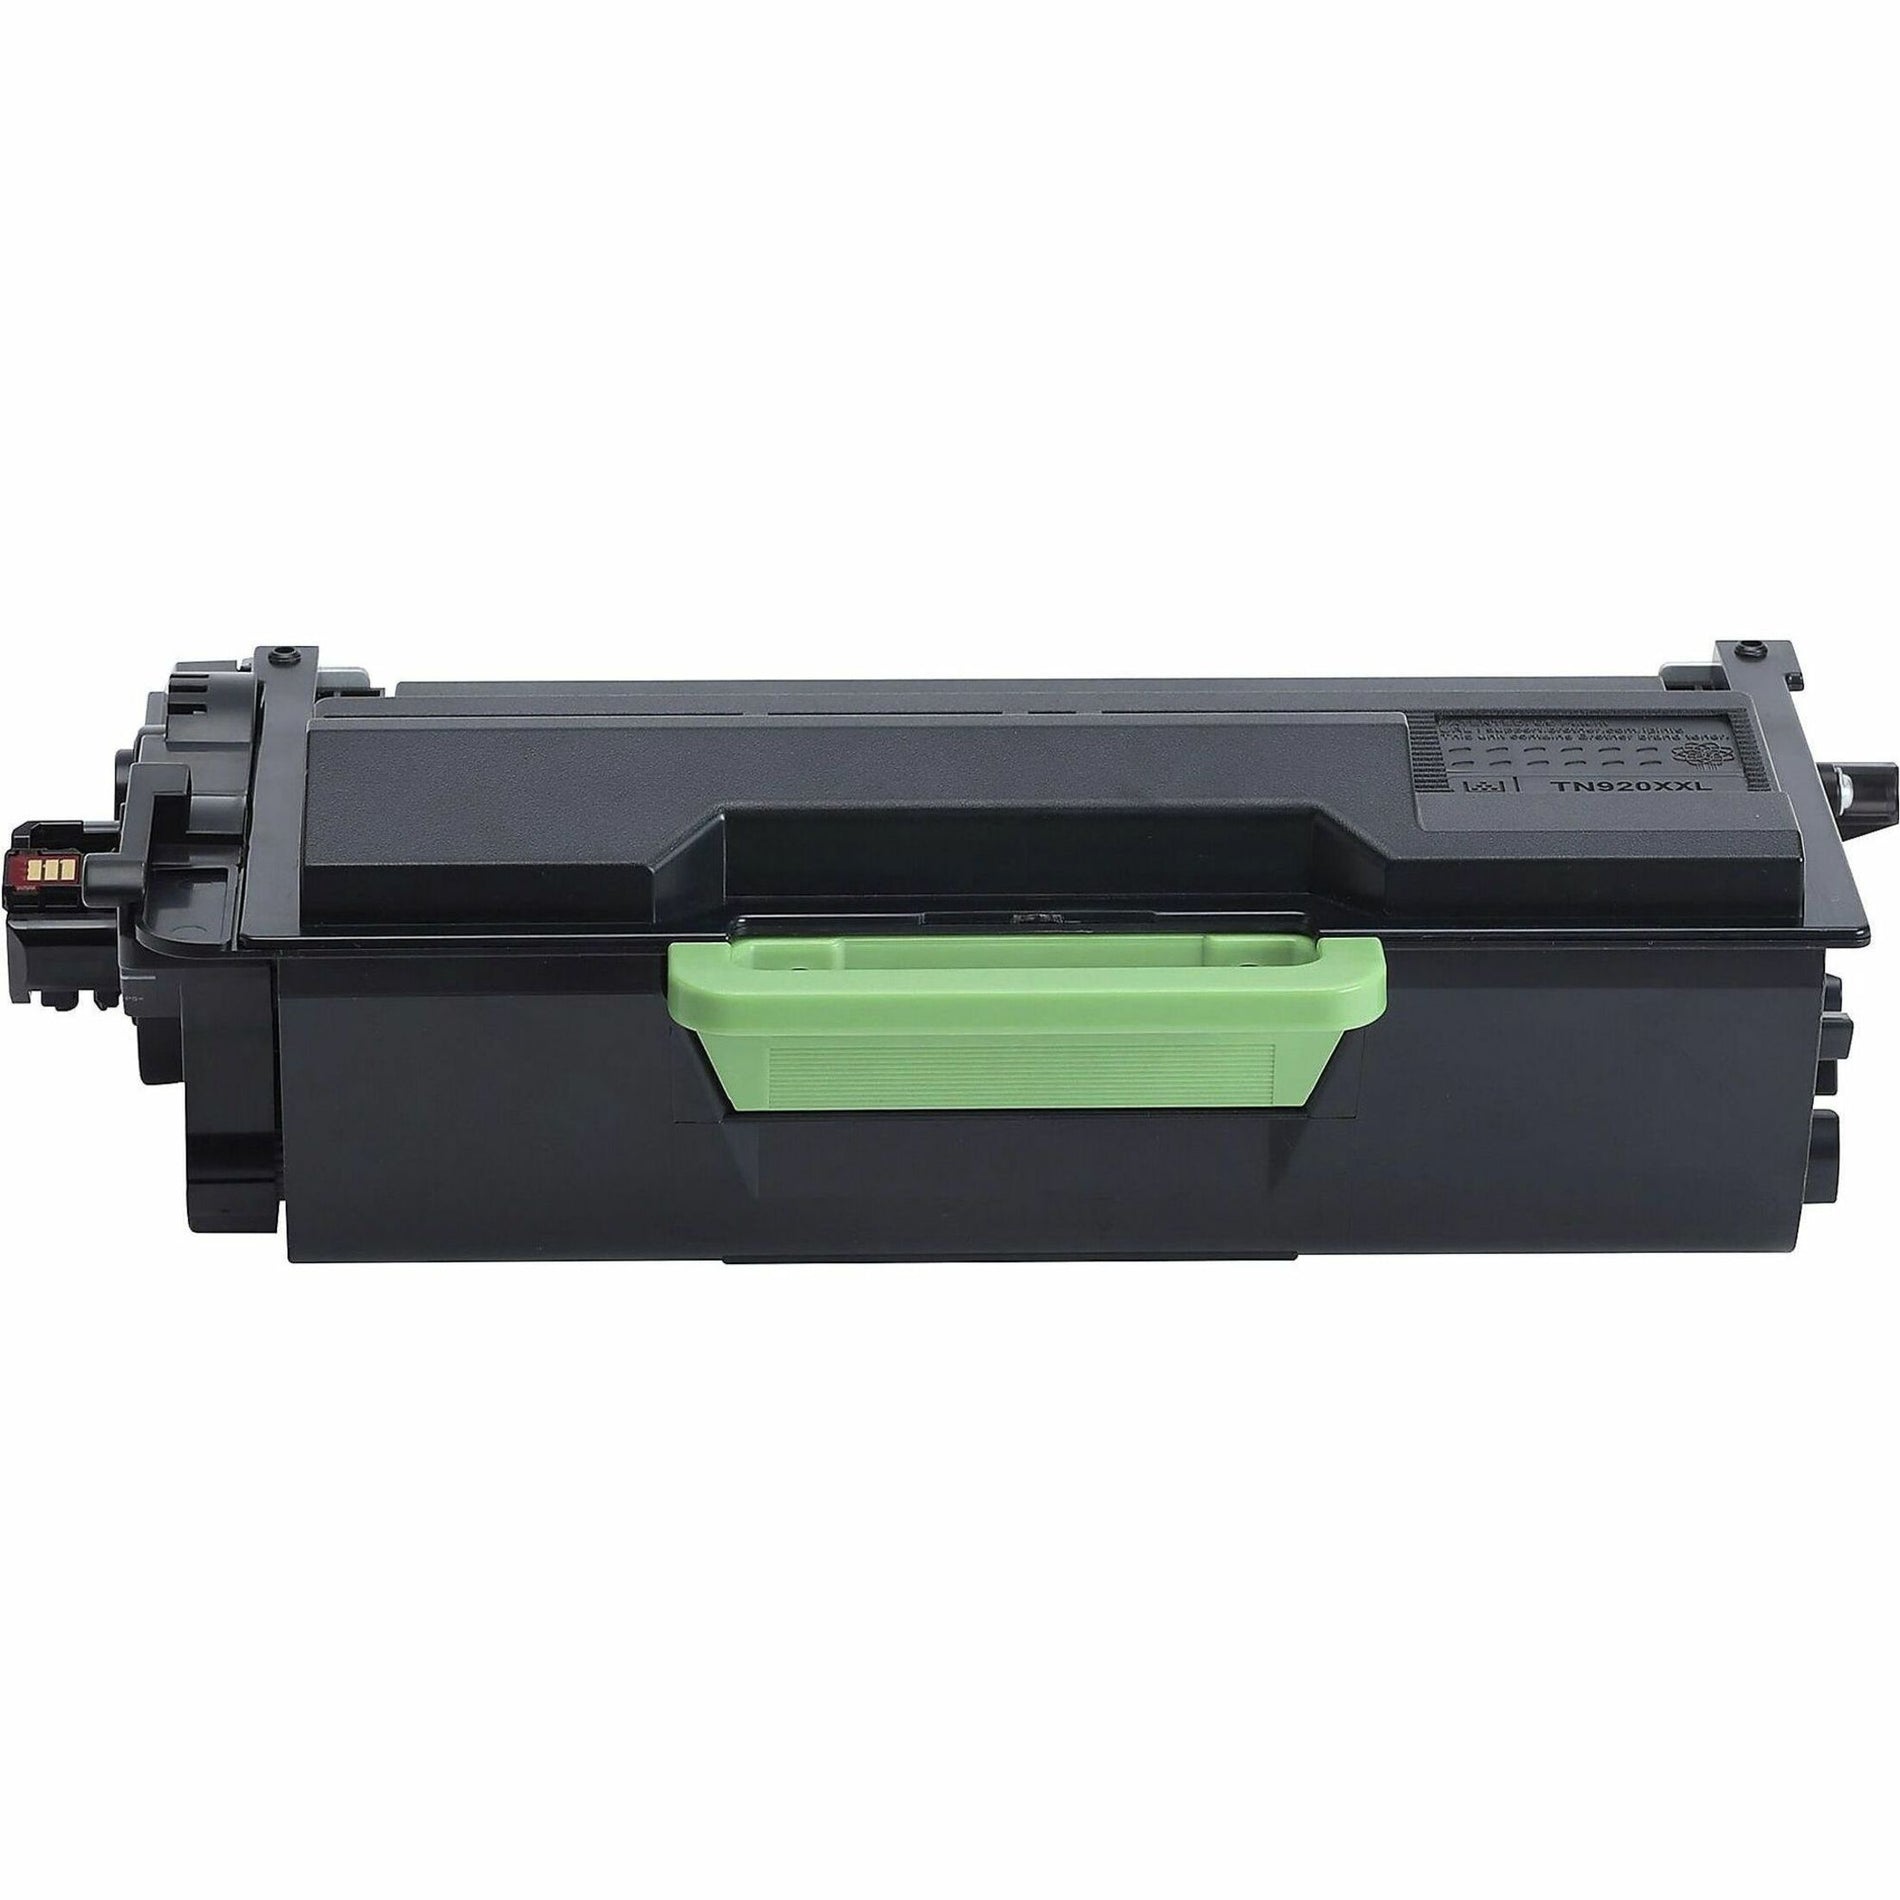 Brother TN920XXL Super High-yield Toner Cartridge - Genuine Black Toner for Brother Printers